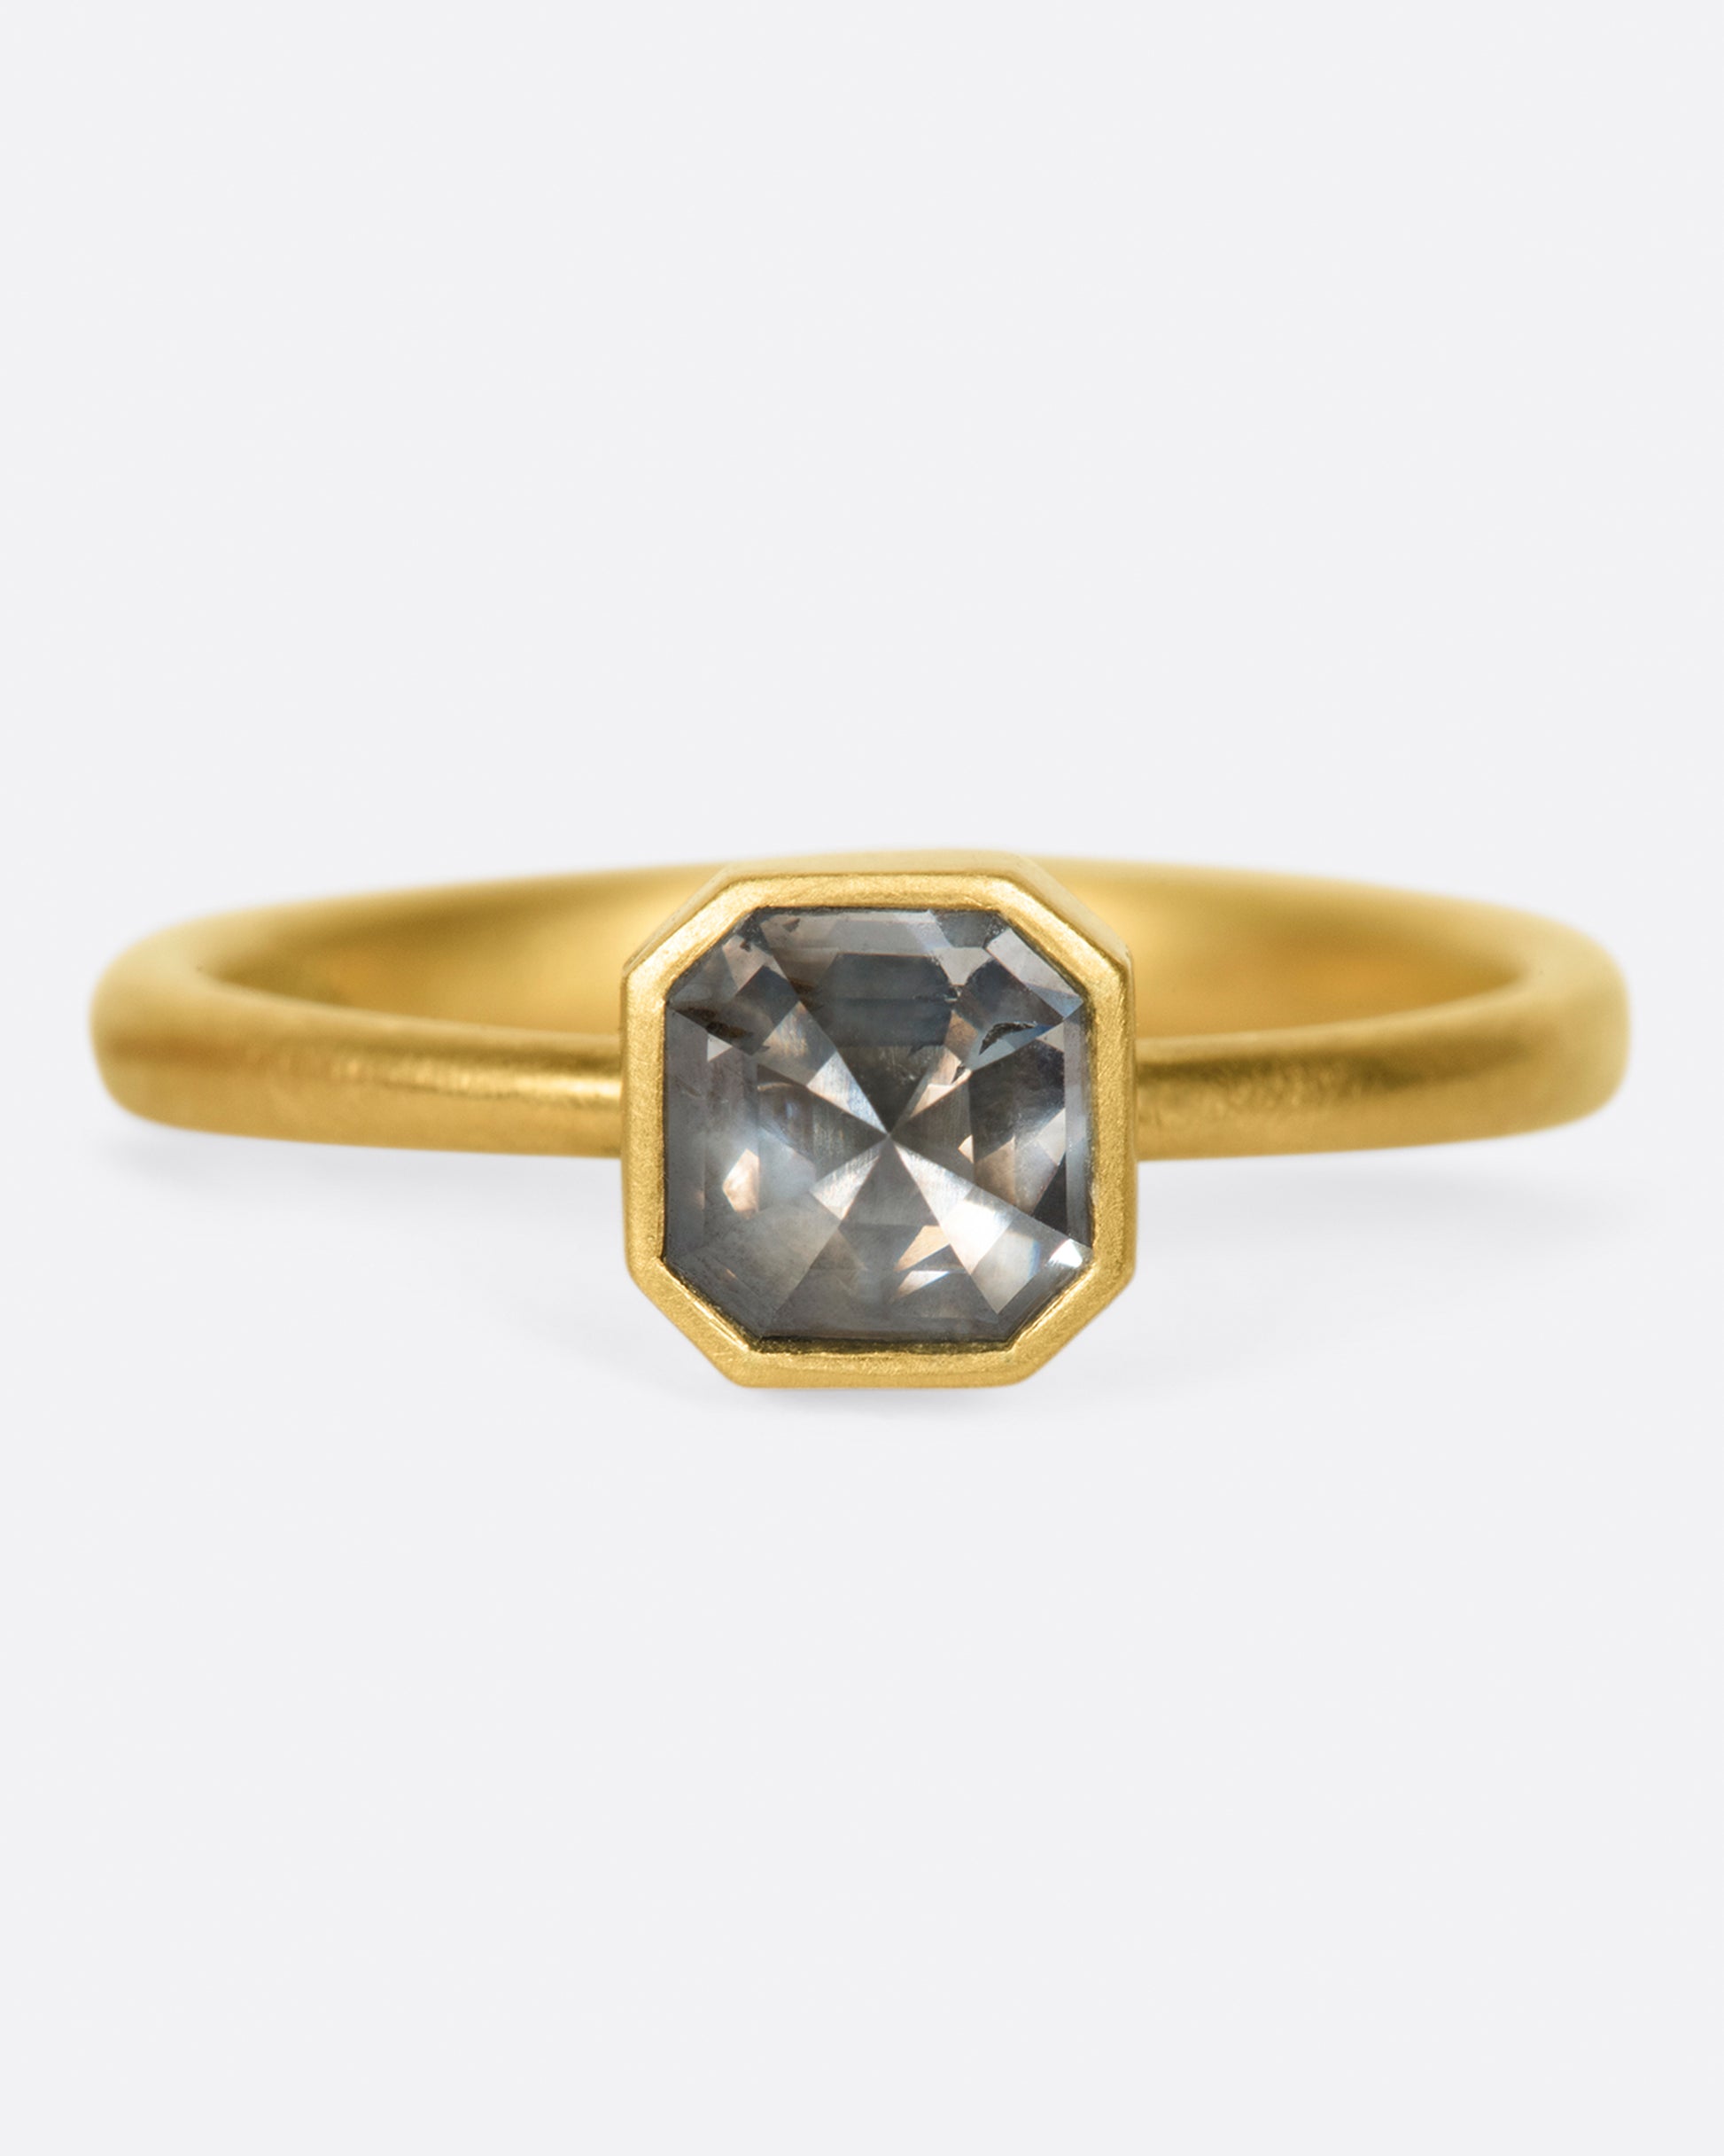 A smokey octagonal diamond ring by Lola Brooks.